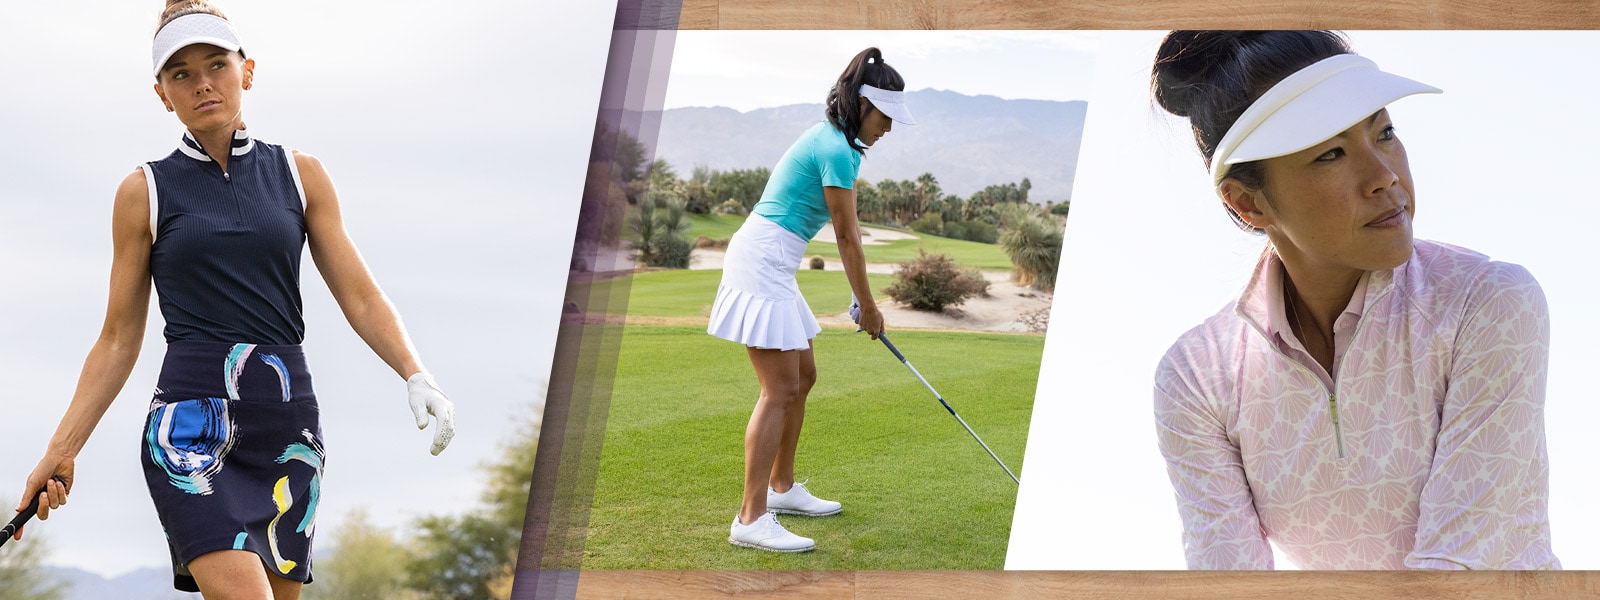 Image features female golfers wearing Lady Hagen golf apparel.